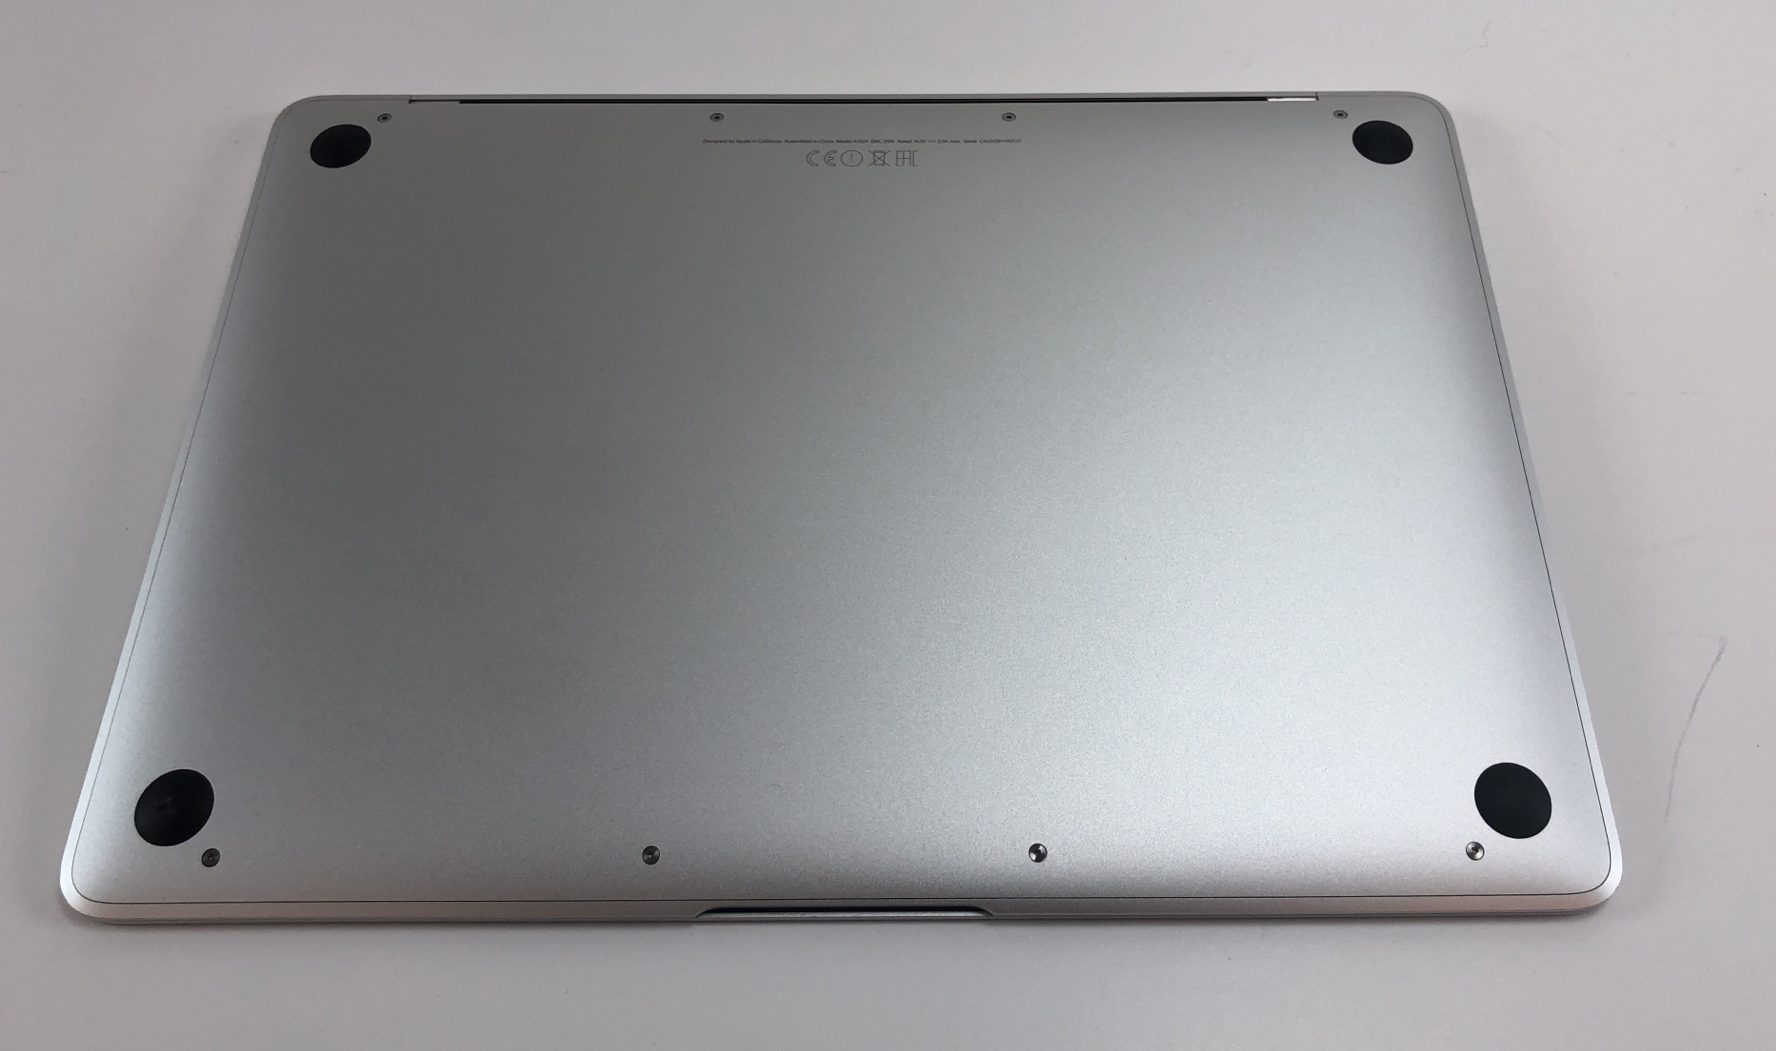 macbook pro mid 2017 15 inchm 512